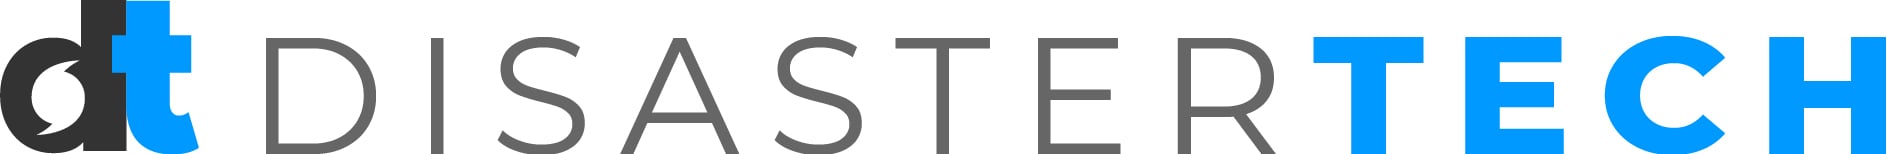 dt-logo-2.0-2a-RGB-1